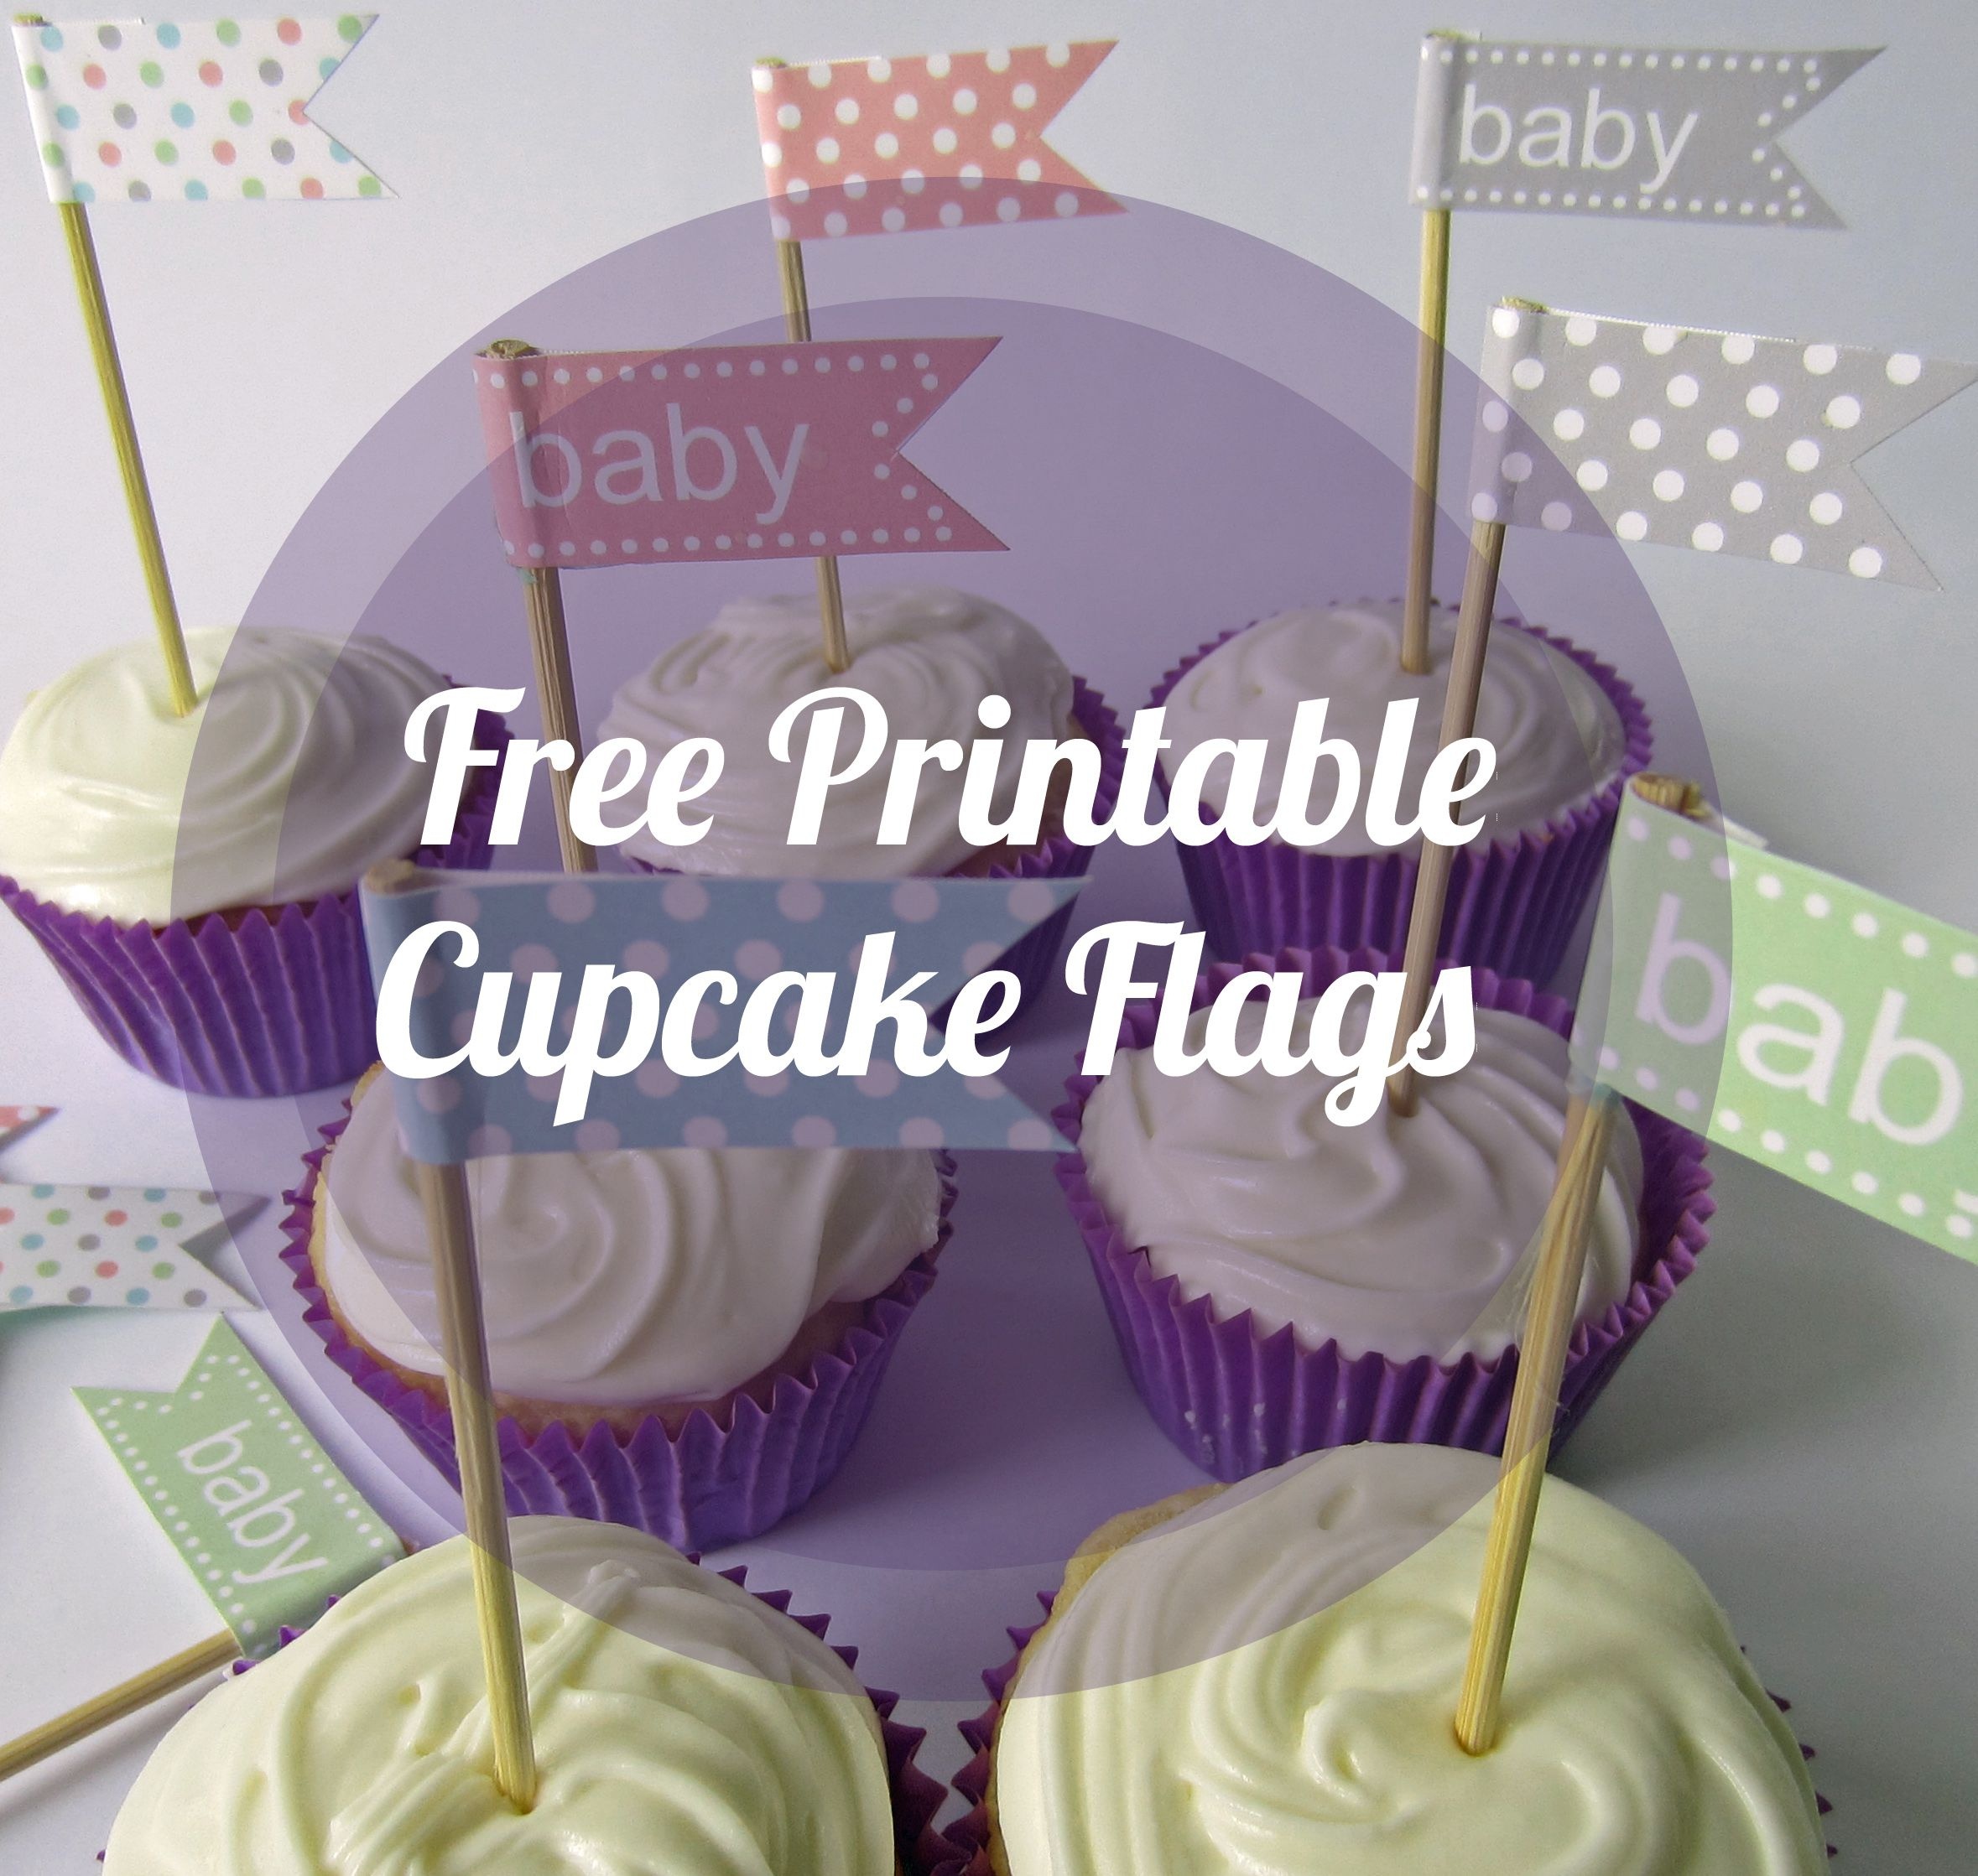 Printable Cupcake Flags | Free Printable Cupcake Flags | Baby - Cupcake Flags Printable Free